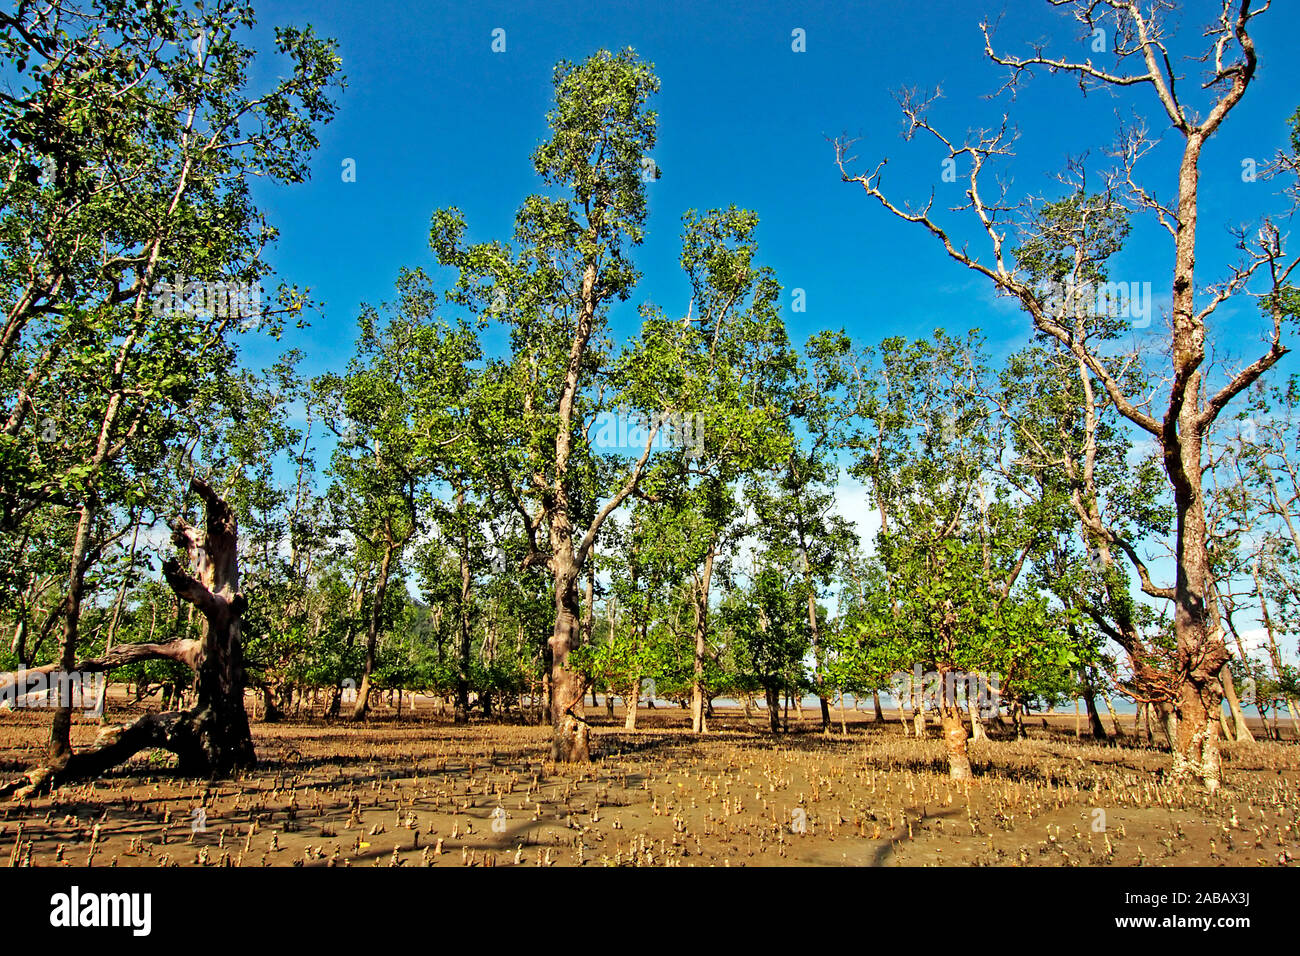 Mangrovenwald, Bako NP, Malaysia, Borneo Stock Photo